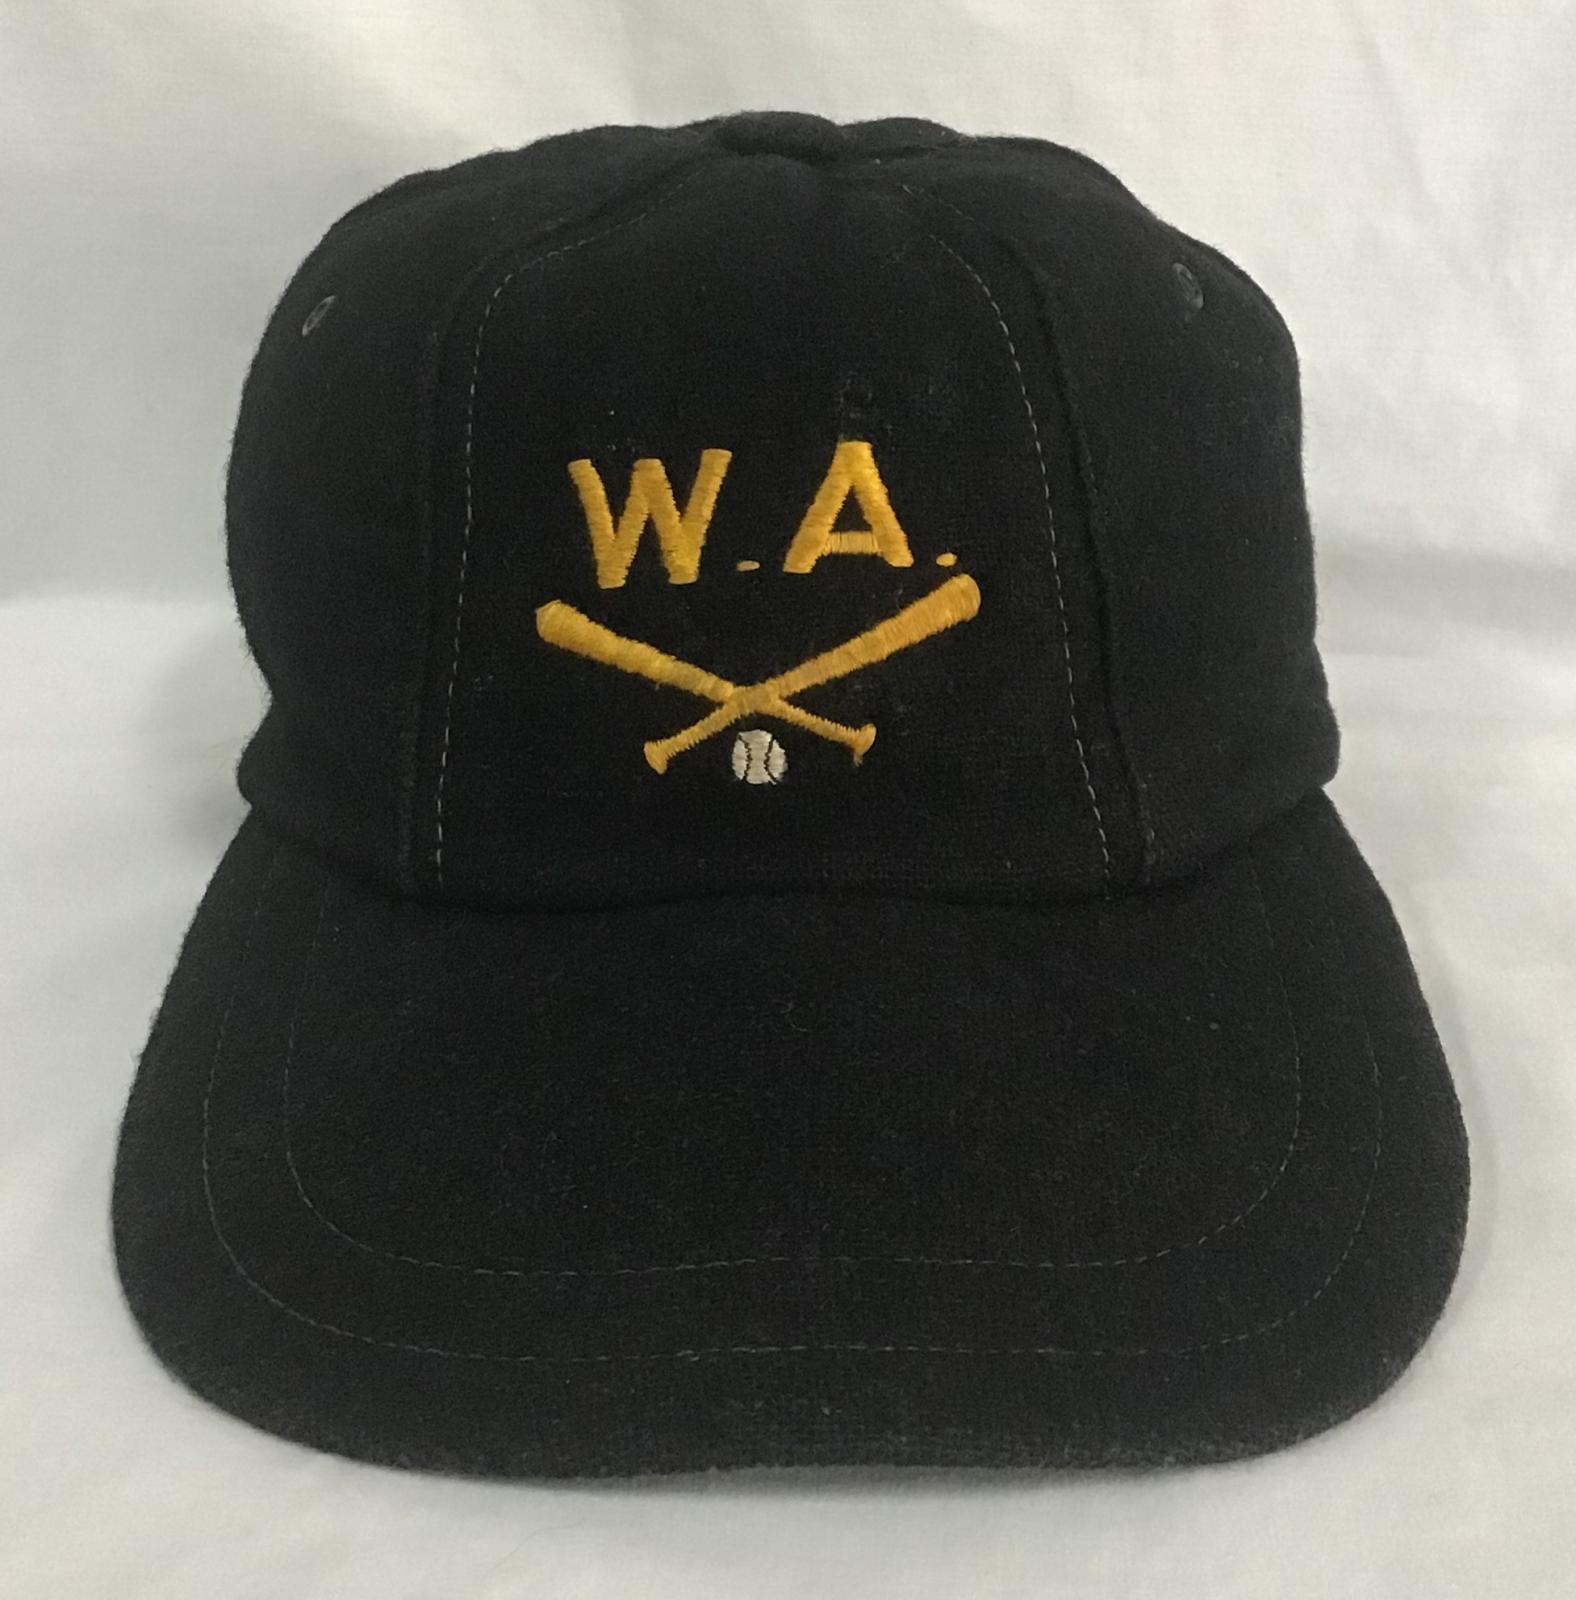 1973 Western Australian State baseball team cap